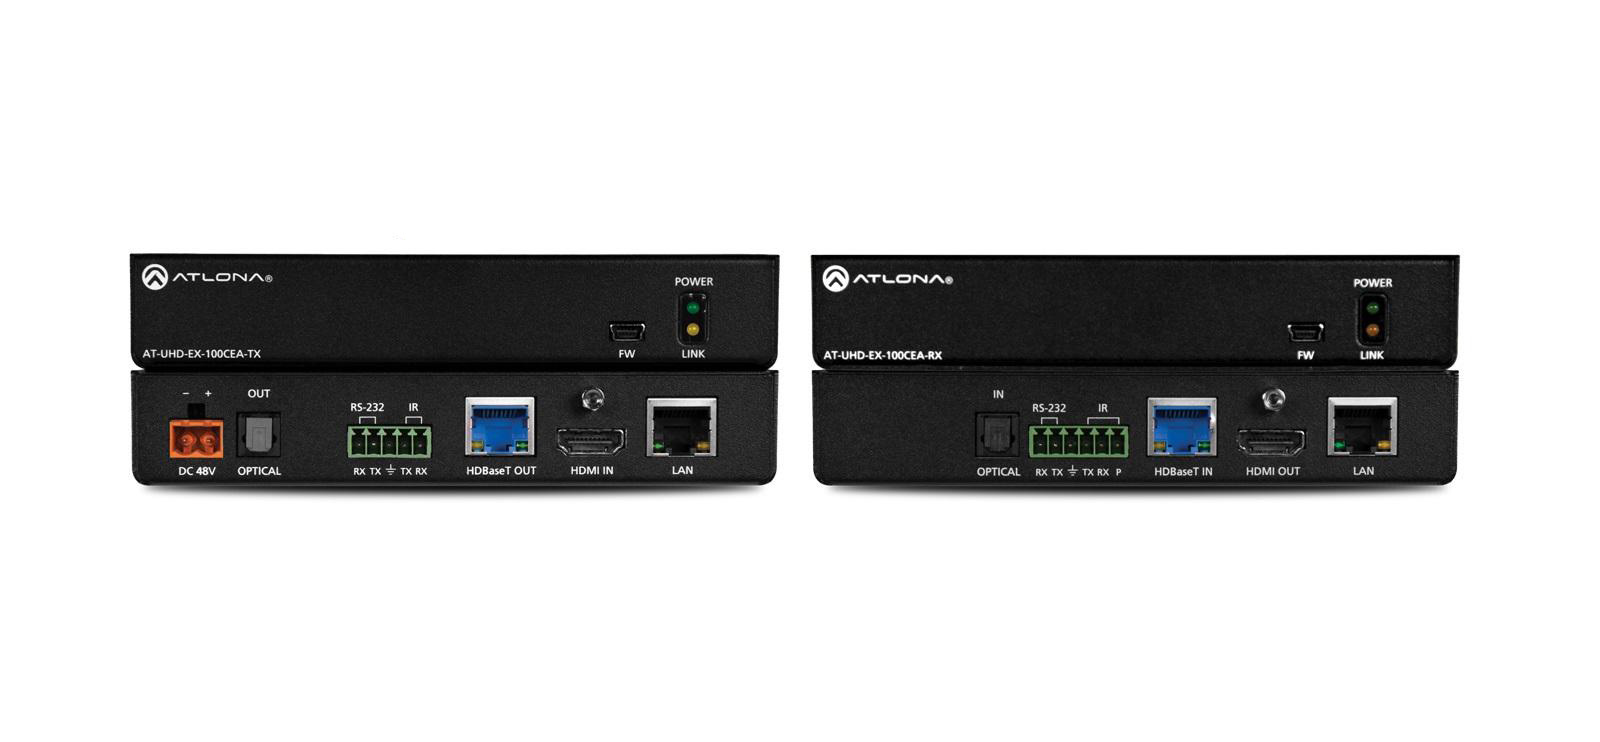 AT-UHD-EX-100CEA-KIT 4K/UHD HDMI HDBaseT Extender (Transmitter/Receiver) Kit/PoE by Atlona